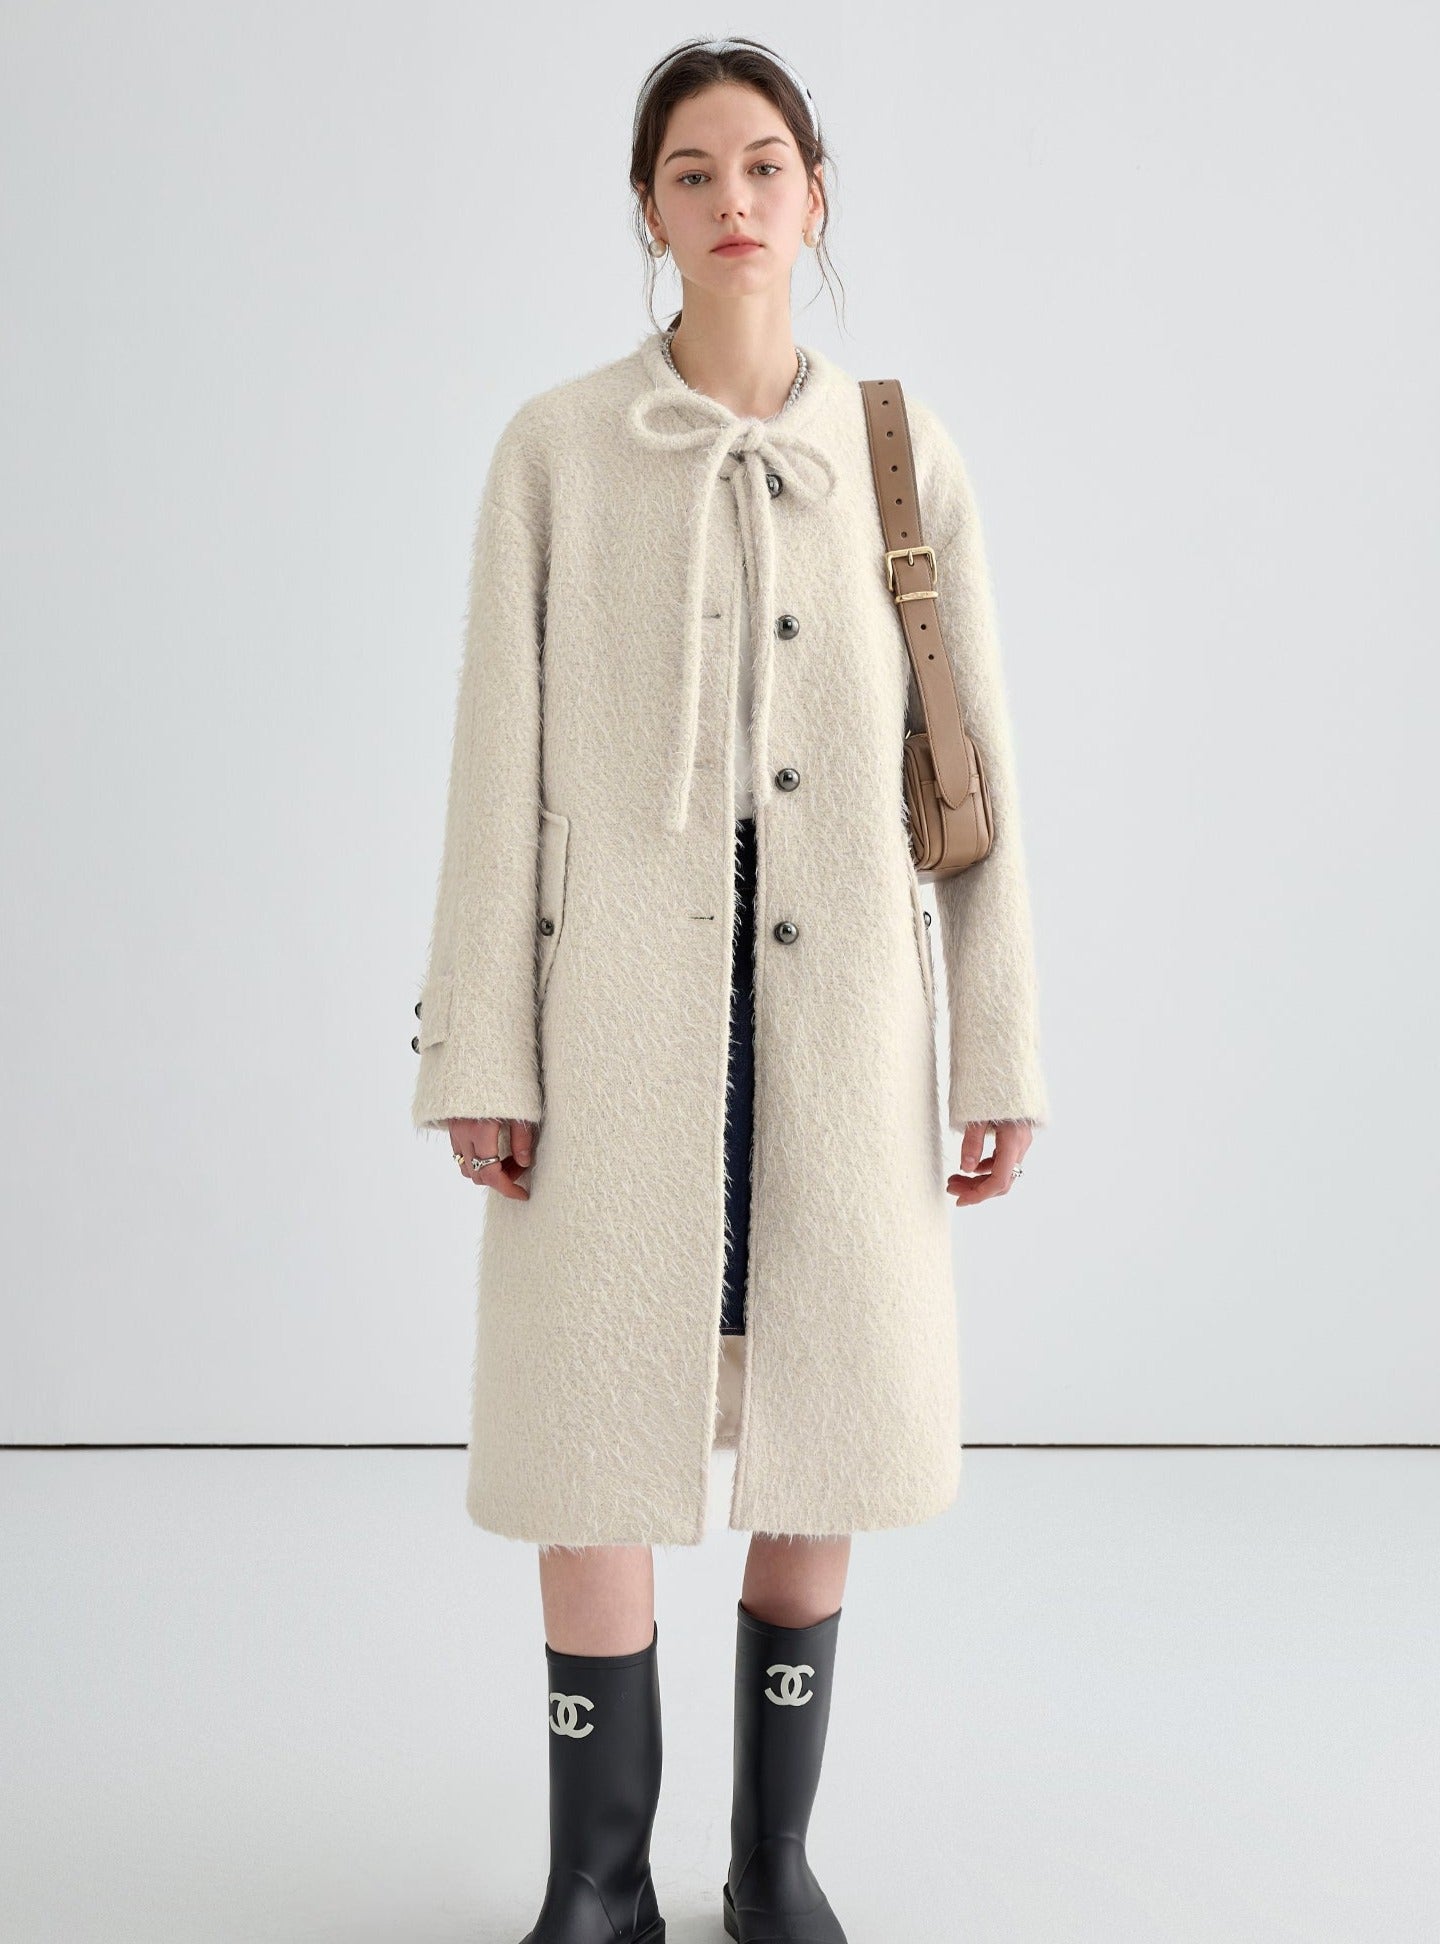 French wool tweed coat